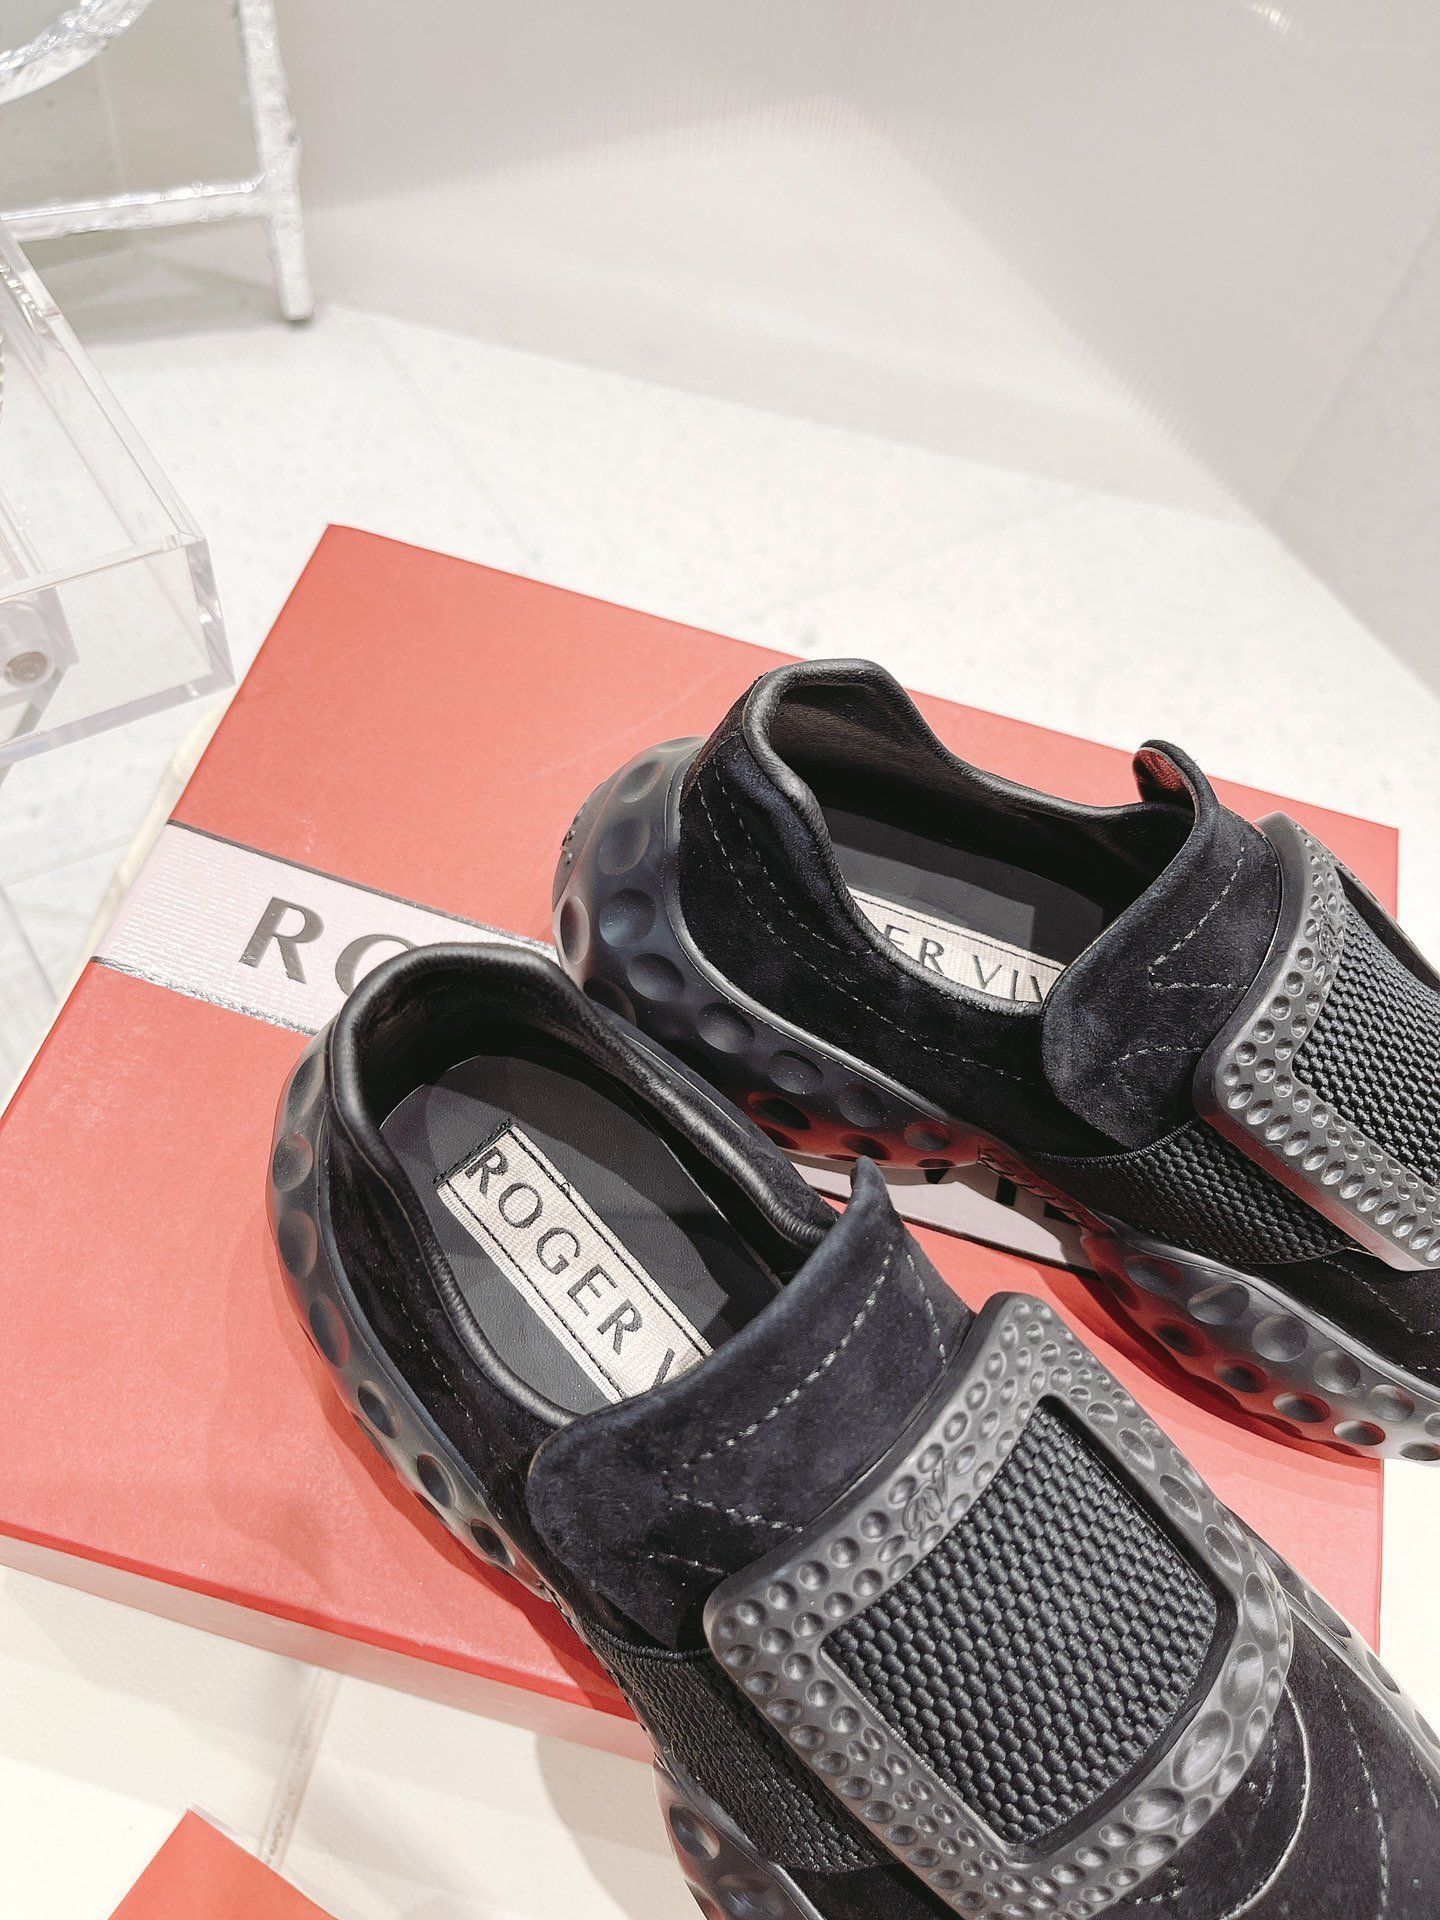 Roger Vivier shoes RVX00002 Heel 5CM